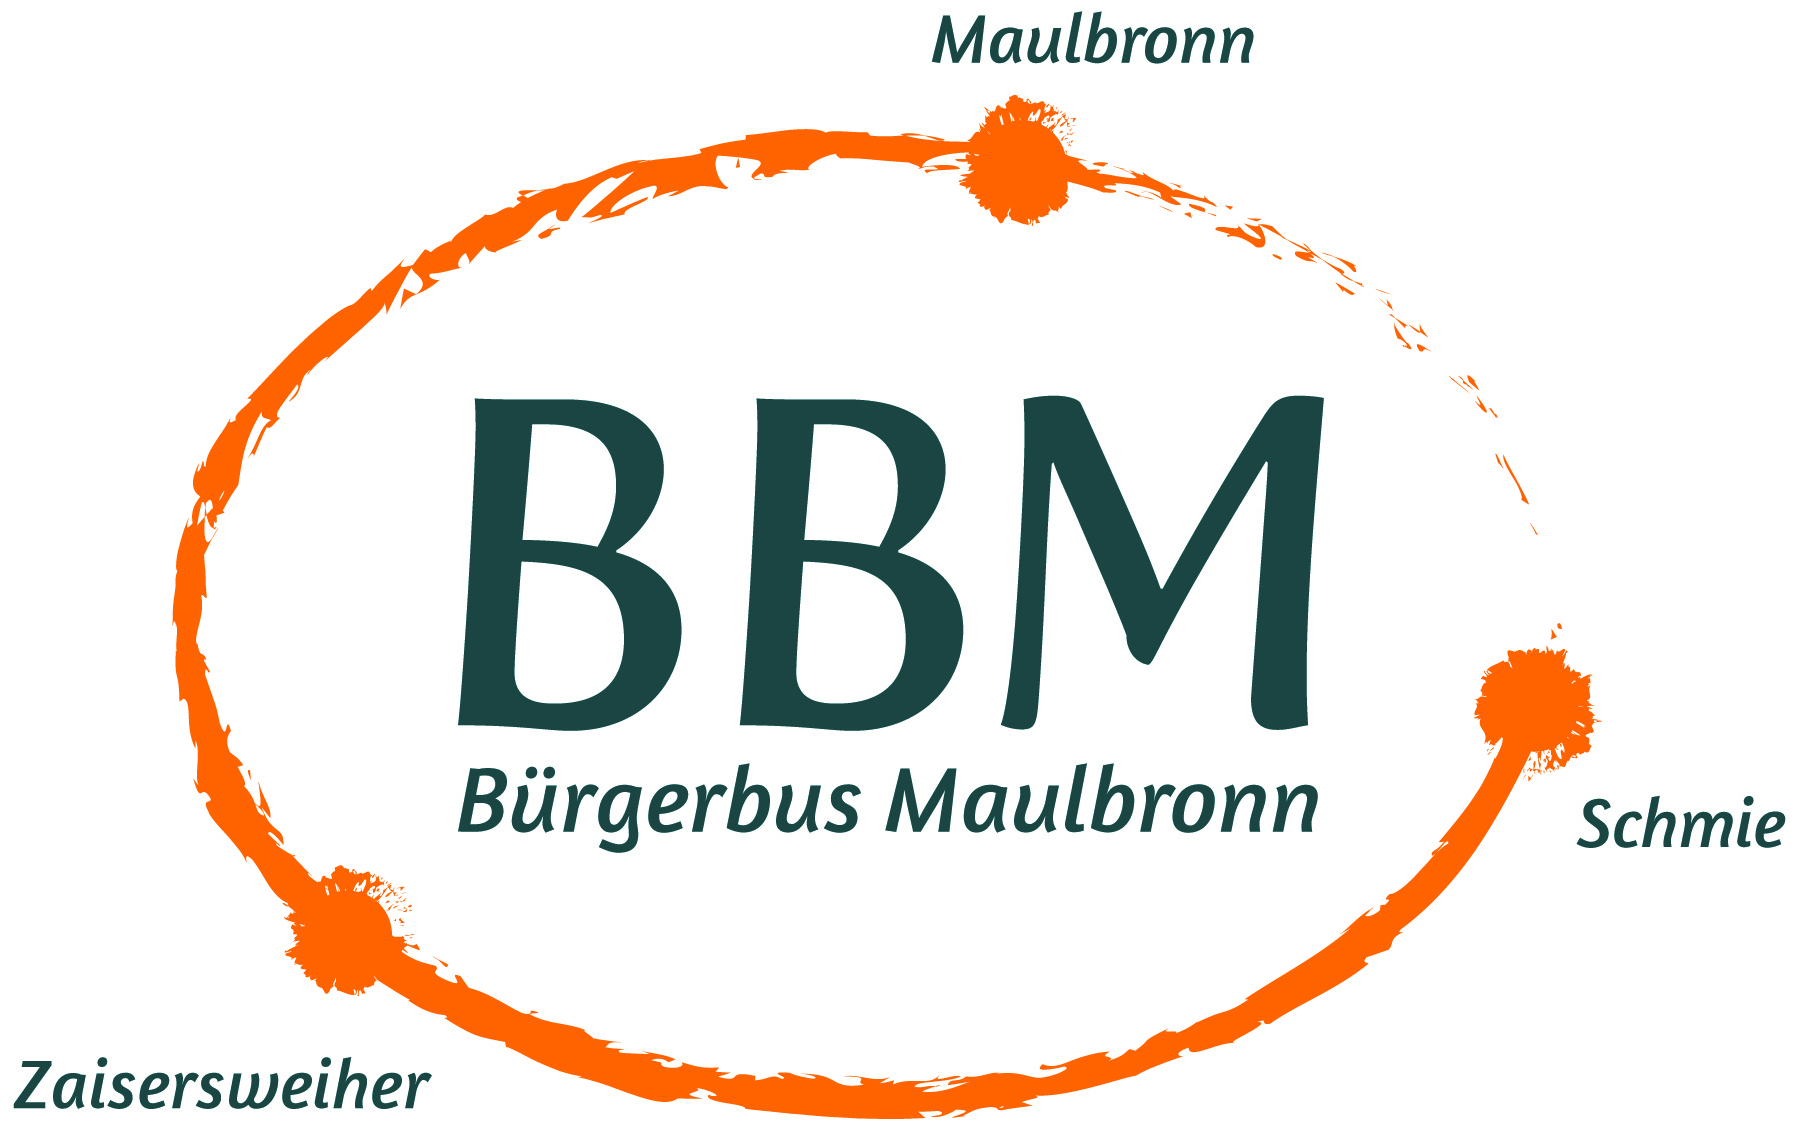 Schriftzug BBM Bürgerbuss Maulbronn mit einem Oval umrundet auf dem die Stadtteil Maulbronn, Schmie und Zaisersweiher vermerkt sind